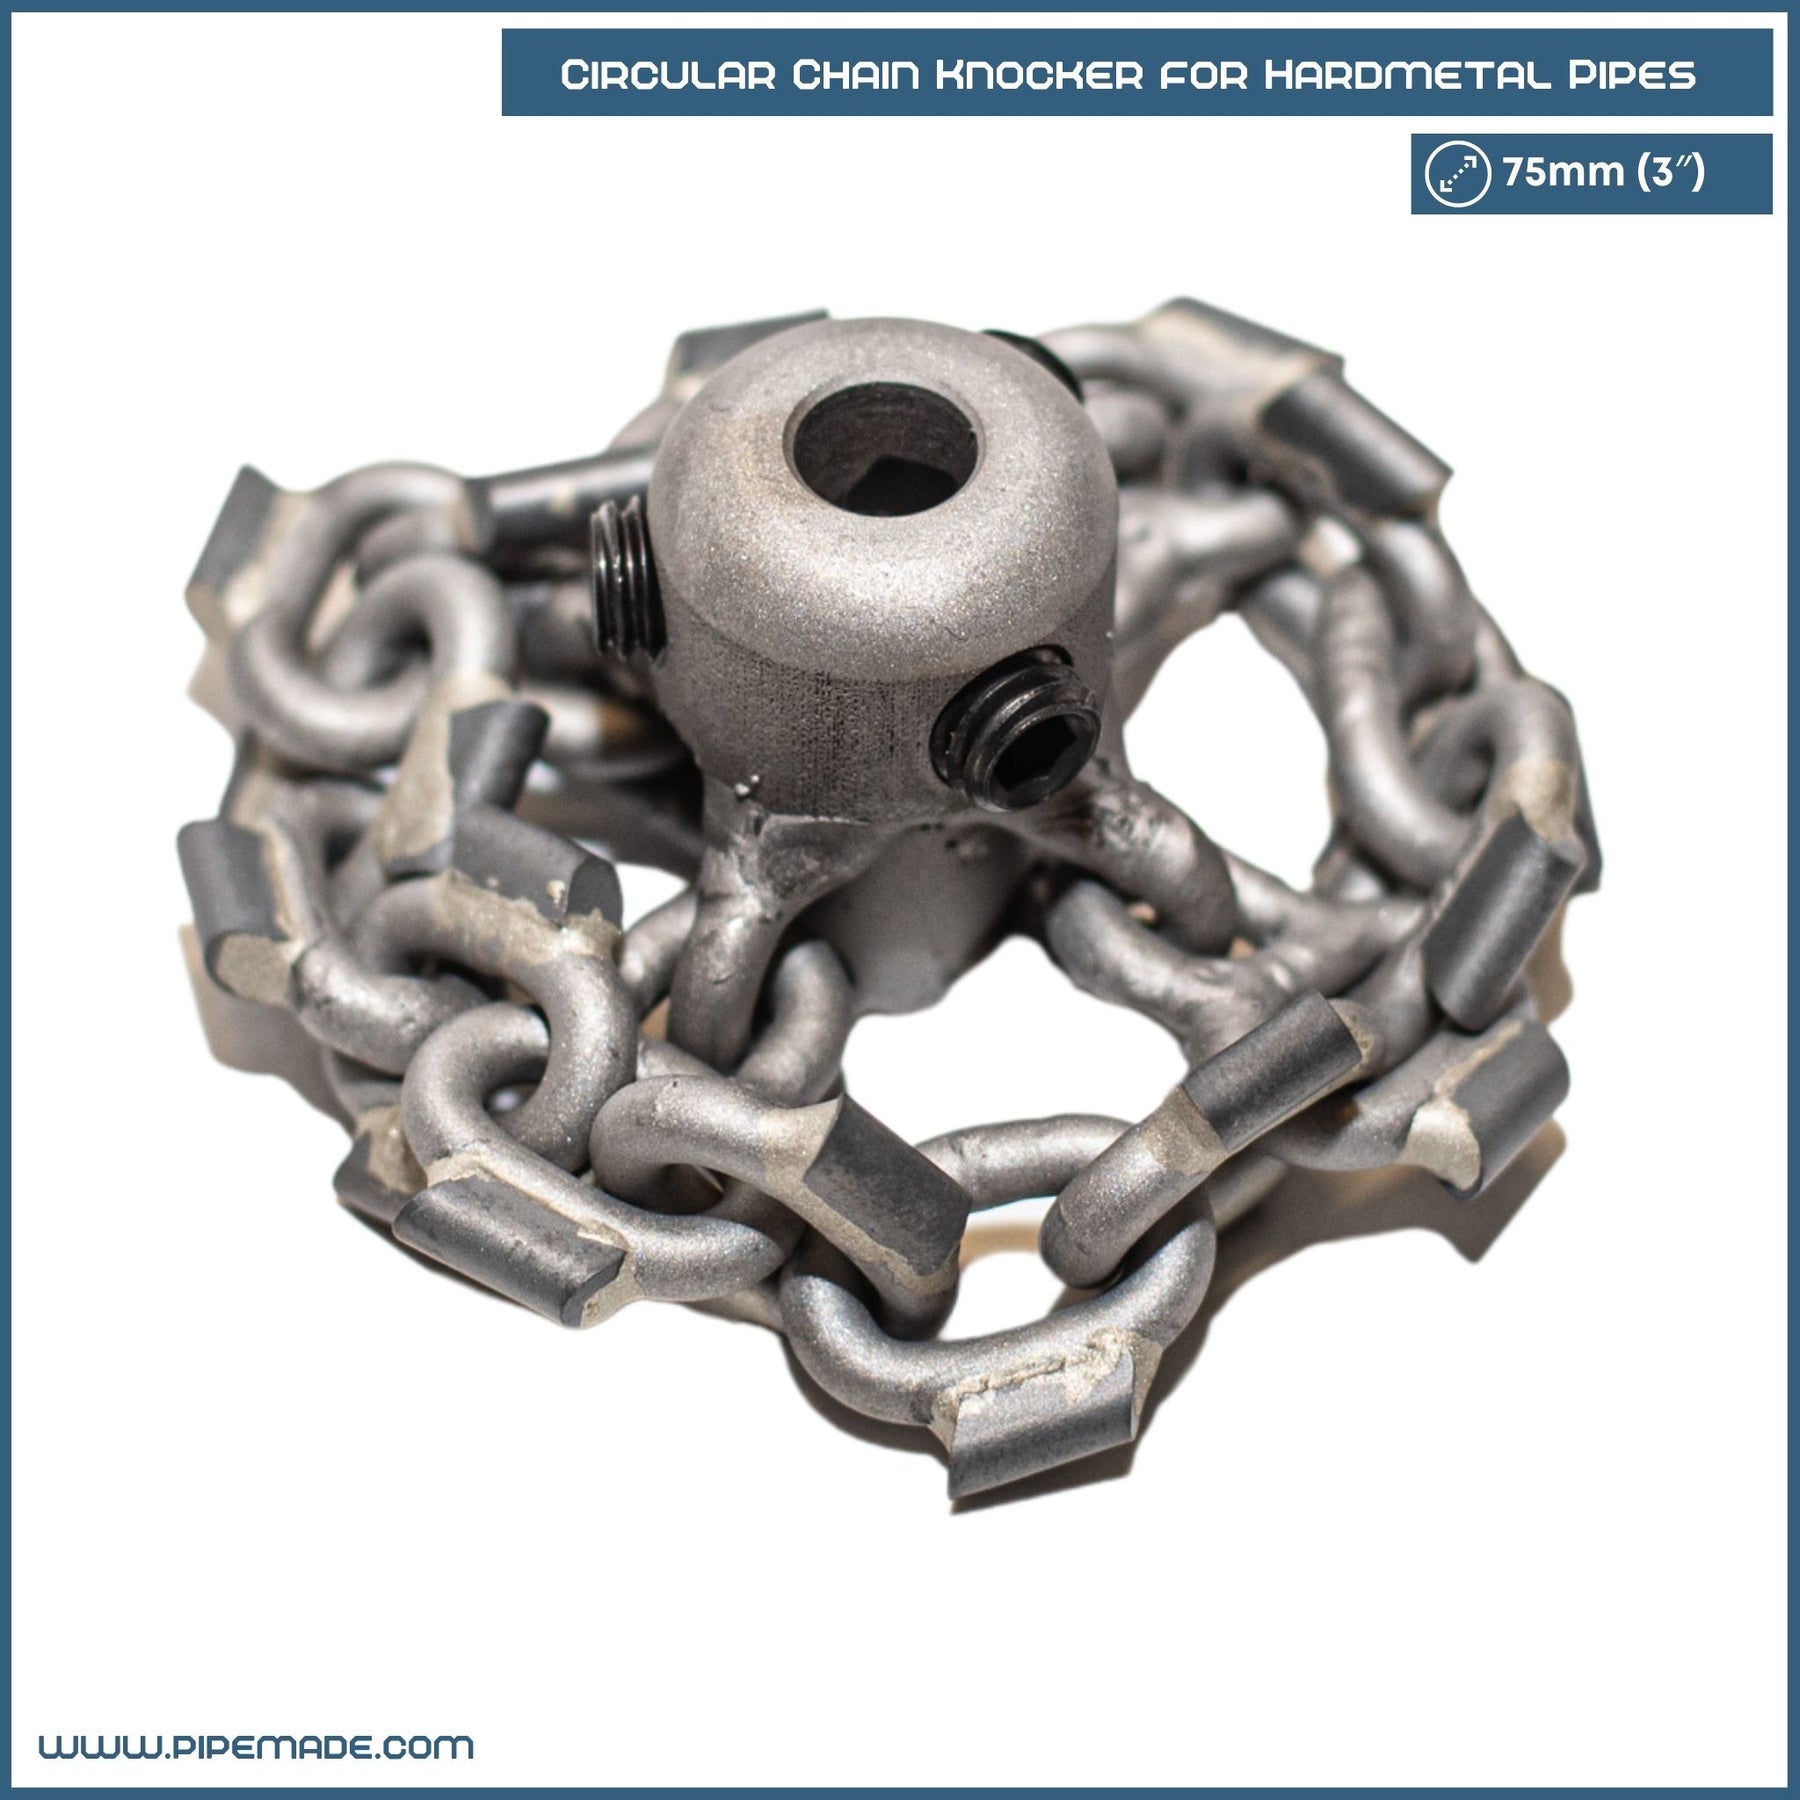 Circular Chain Knocker for Hardmetal Pipes